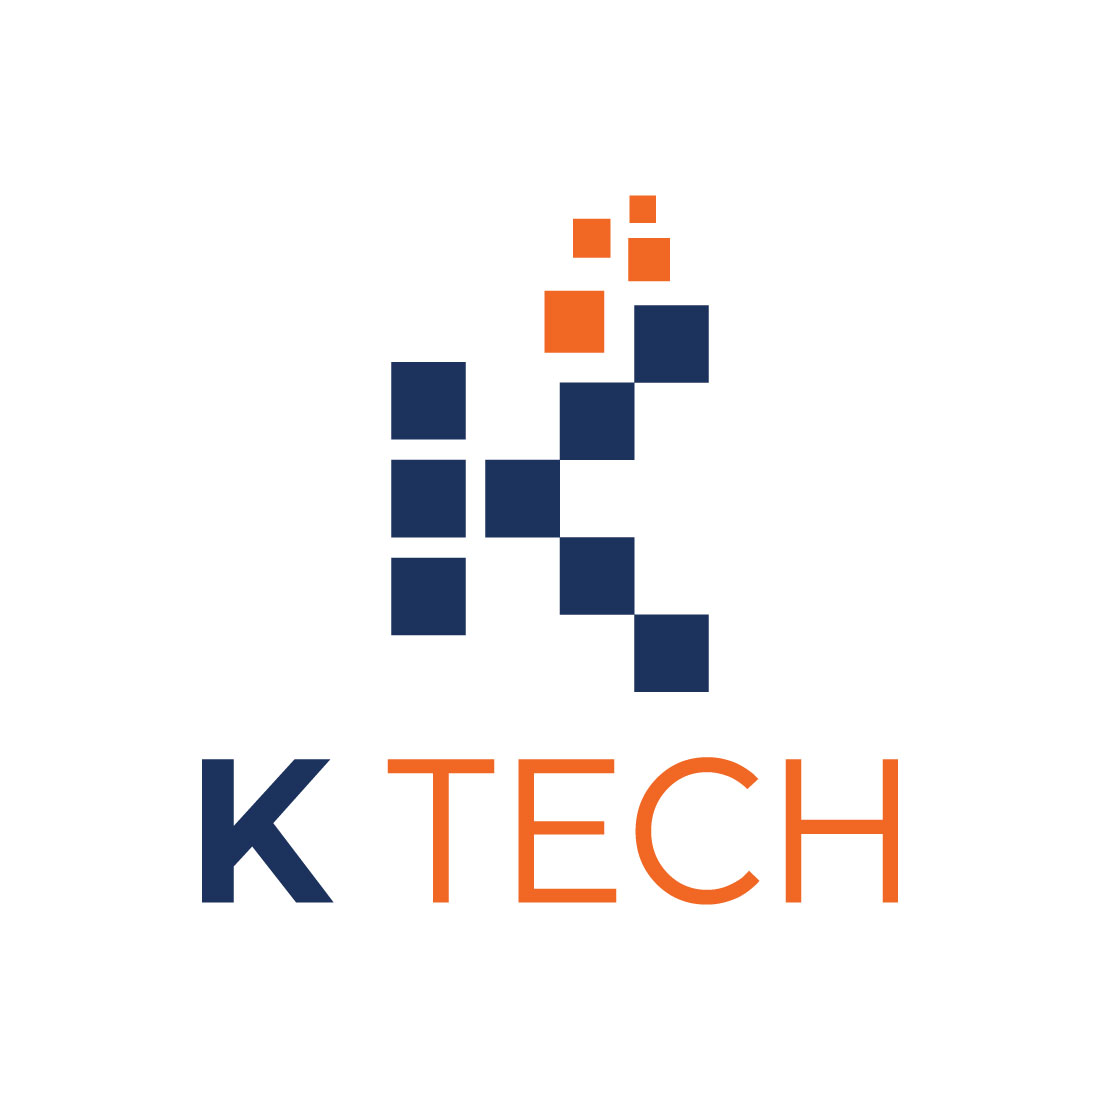 K Letter Logo Design Template cover image.